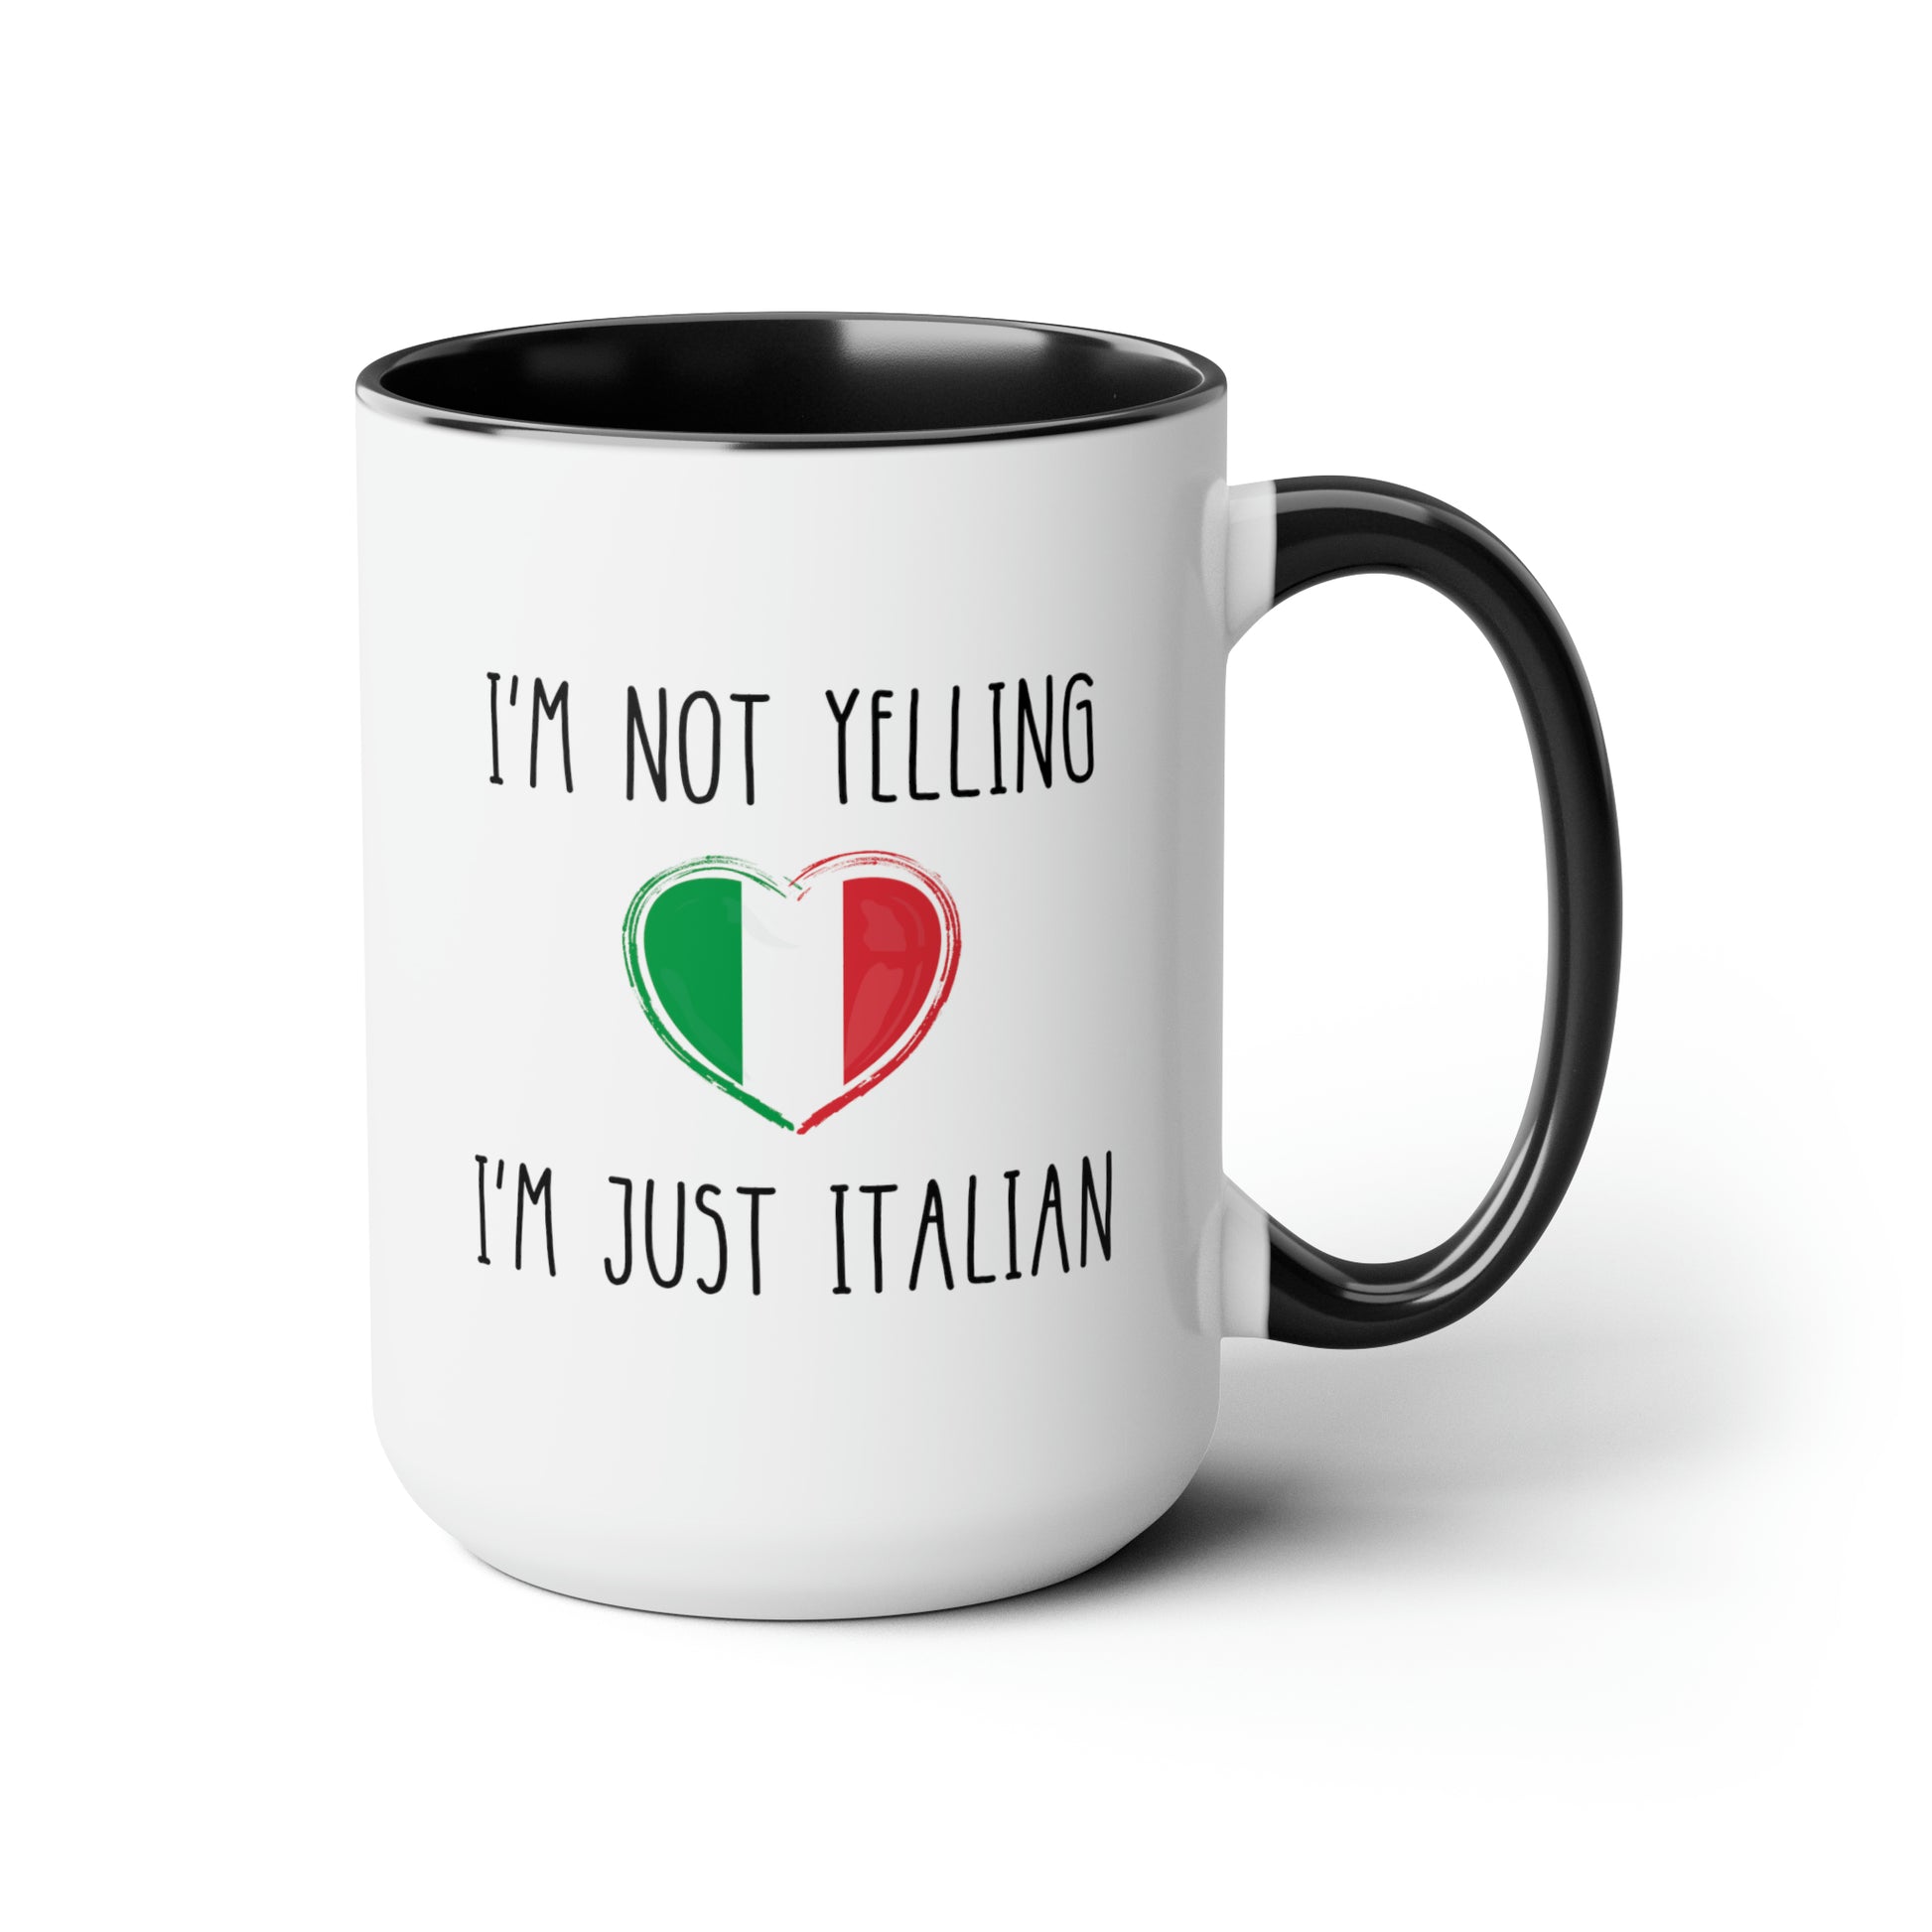 I'm Not Yelling I'm Just Italian 15oz white with black accent funny large coffee mug gift for italy love loud italiana italiano waveywares wavey wares wavywares wavy wares